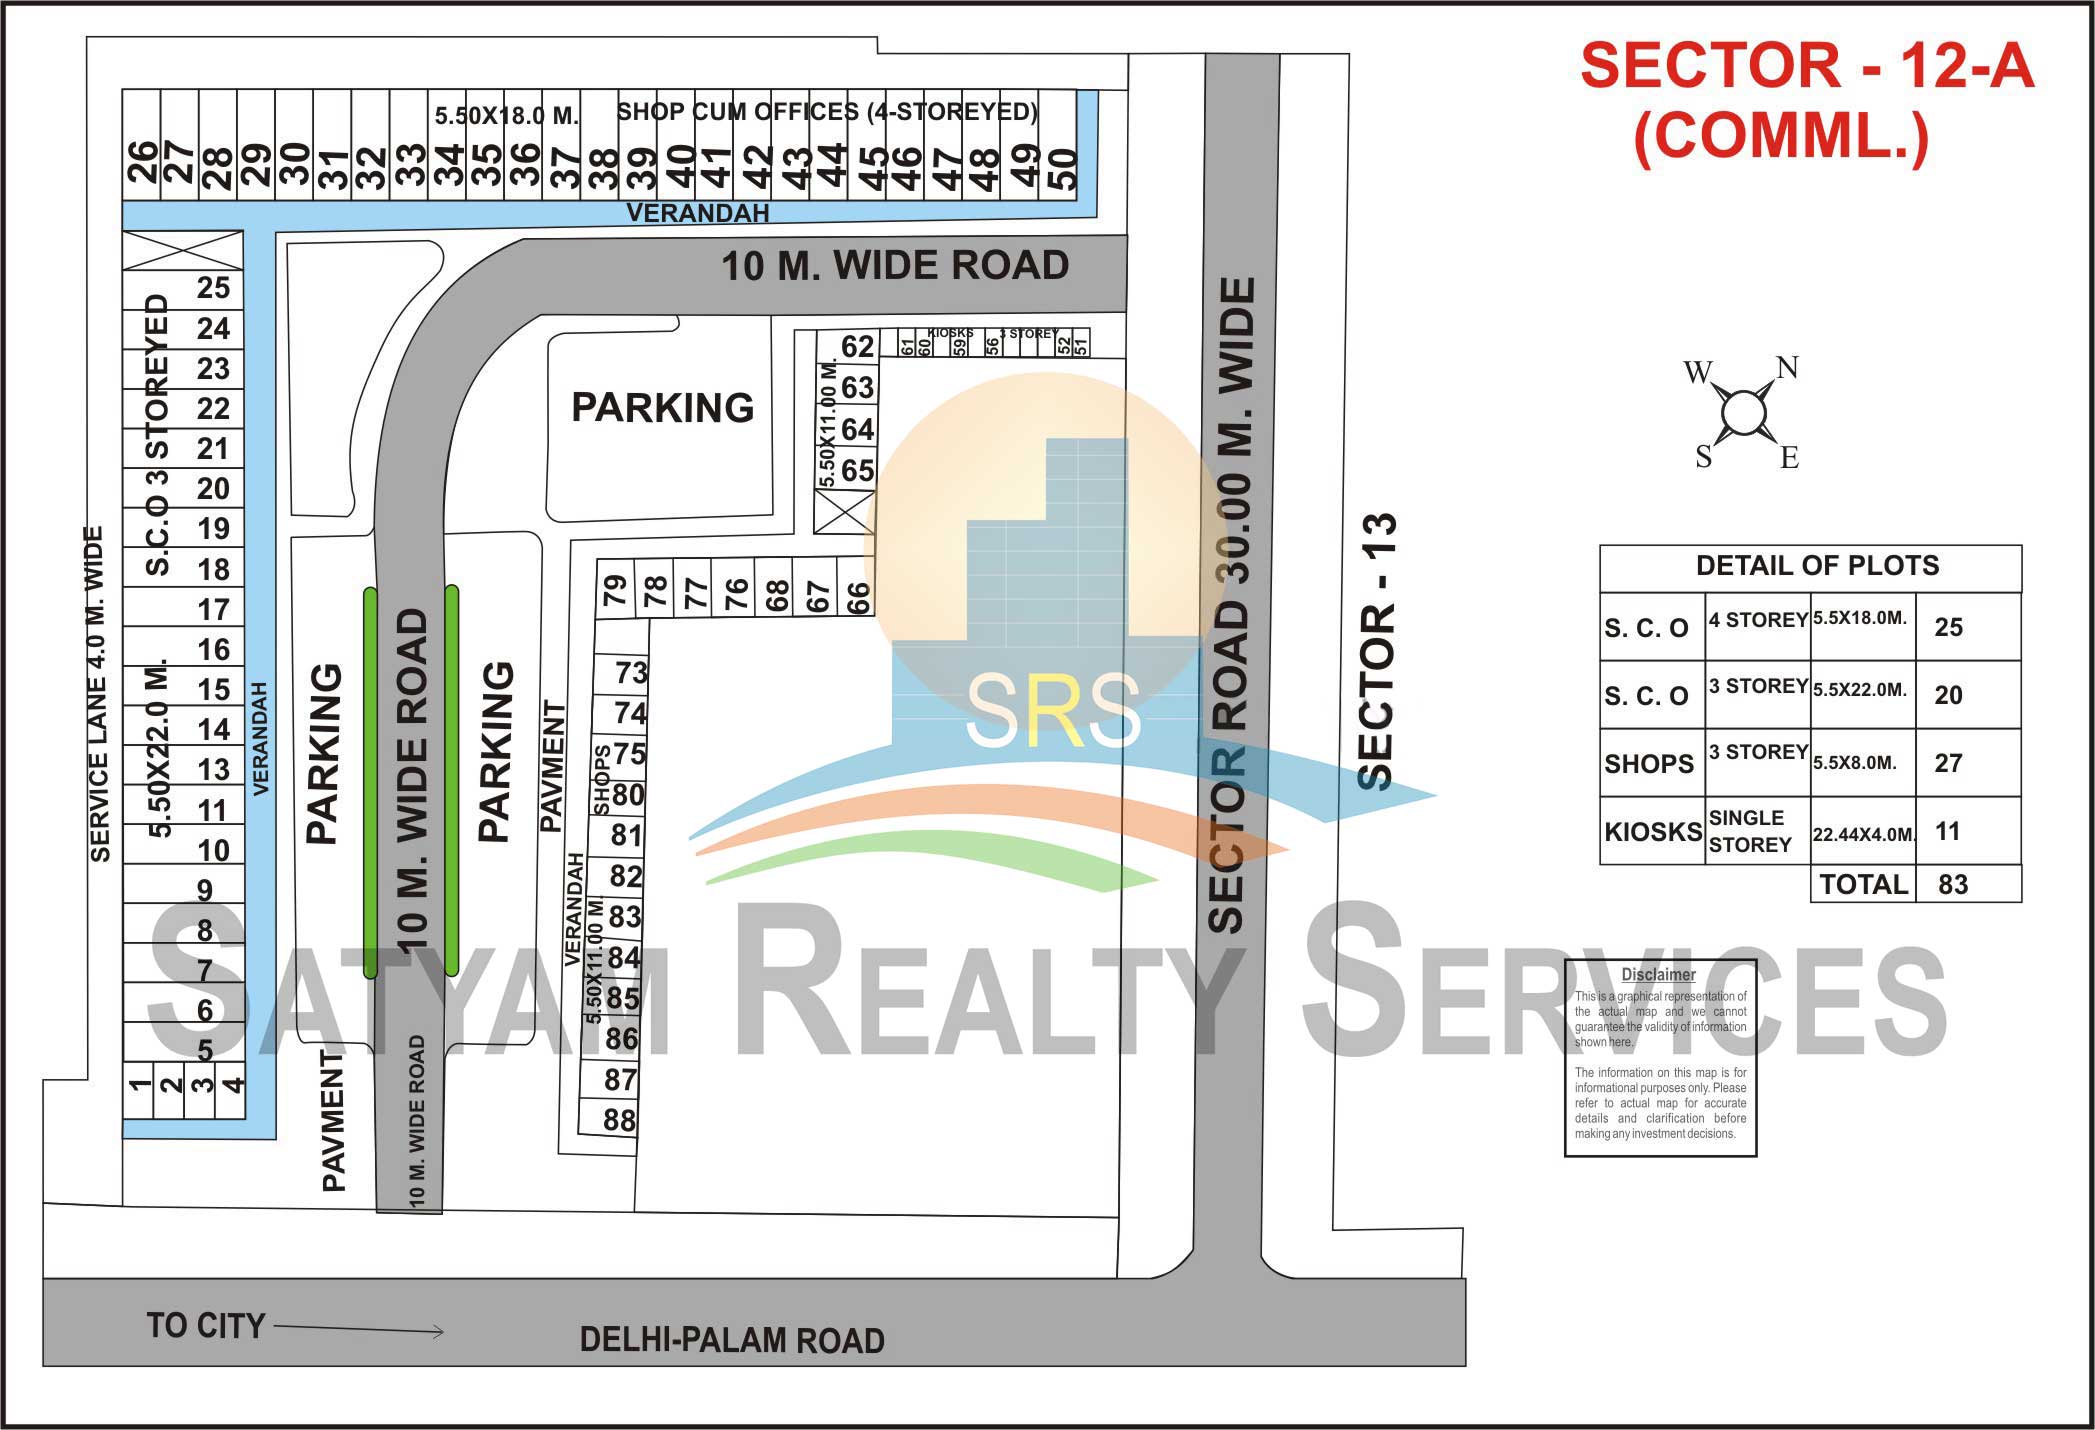 gurgaon map sector 55